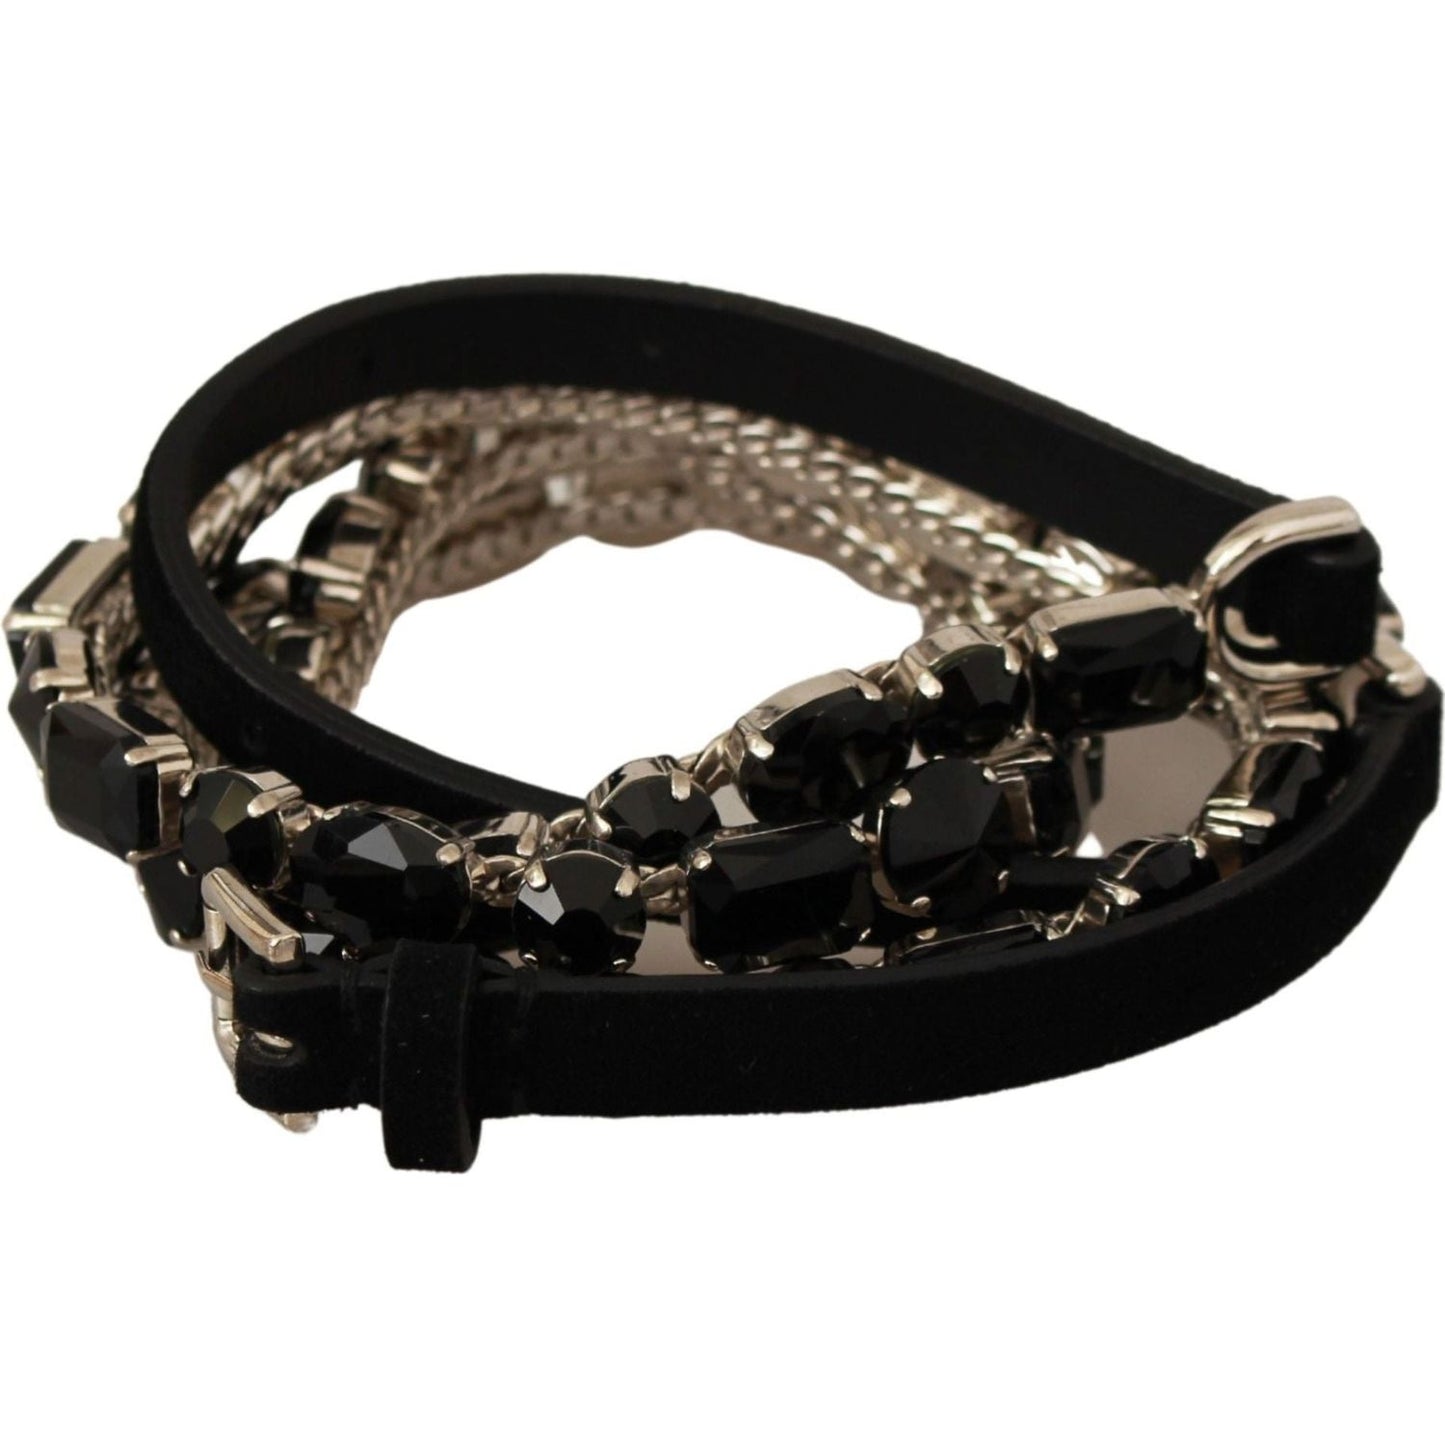 Dolce & Gabbana Luxurious Black Crystal-Embellished Leather Belt black-leather-crystals-waist-belt IMG_1578-7fe6cf73-047.jpg